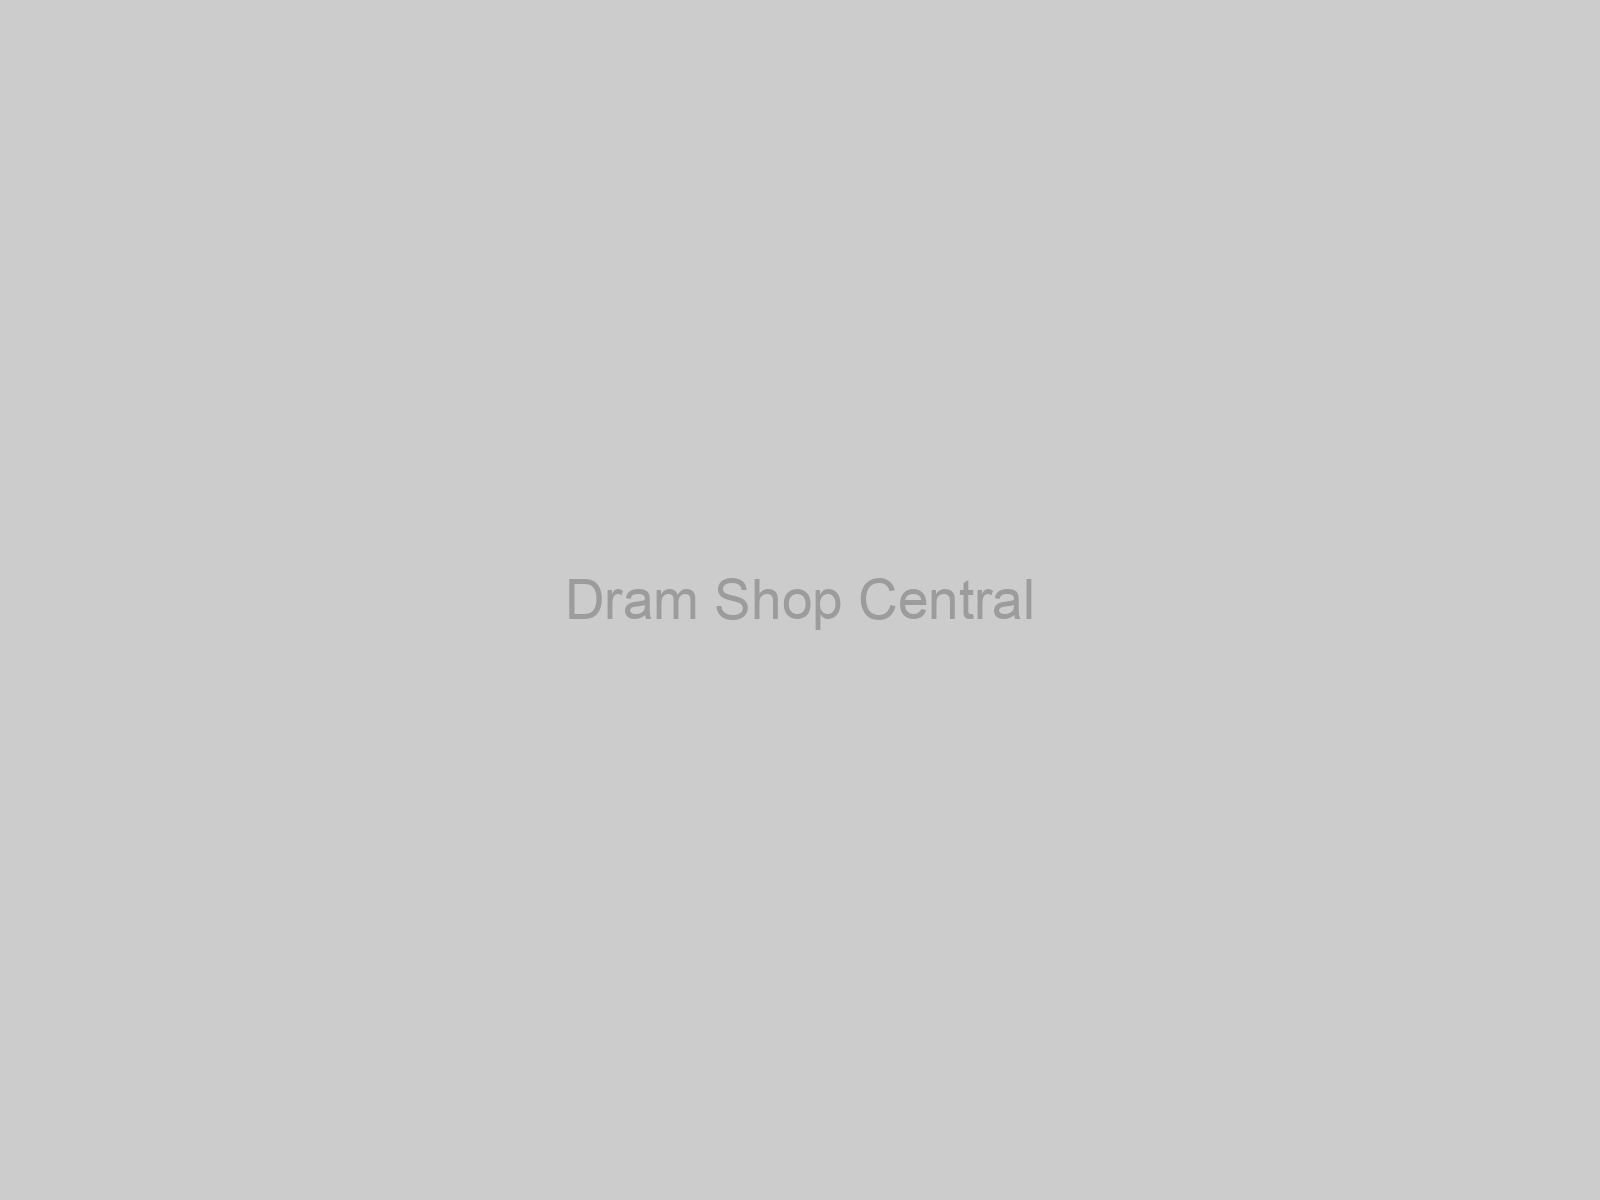 Dram Shop Central